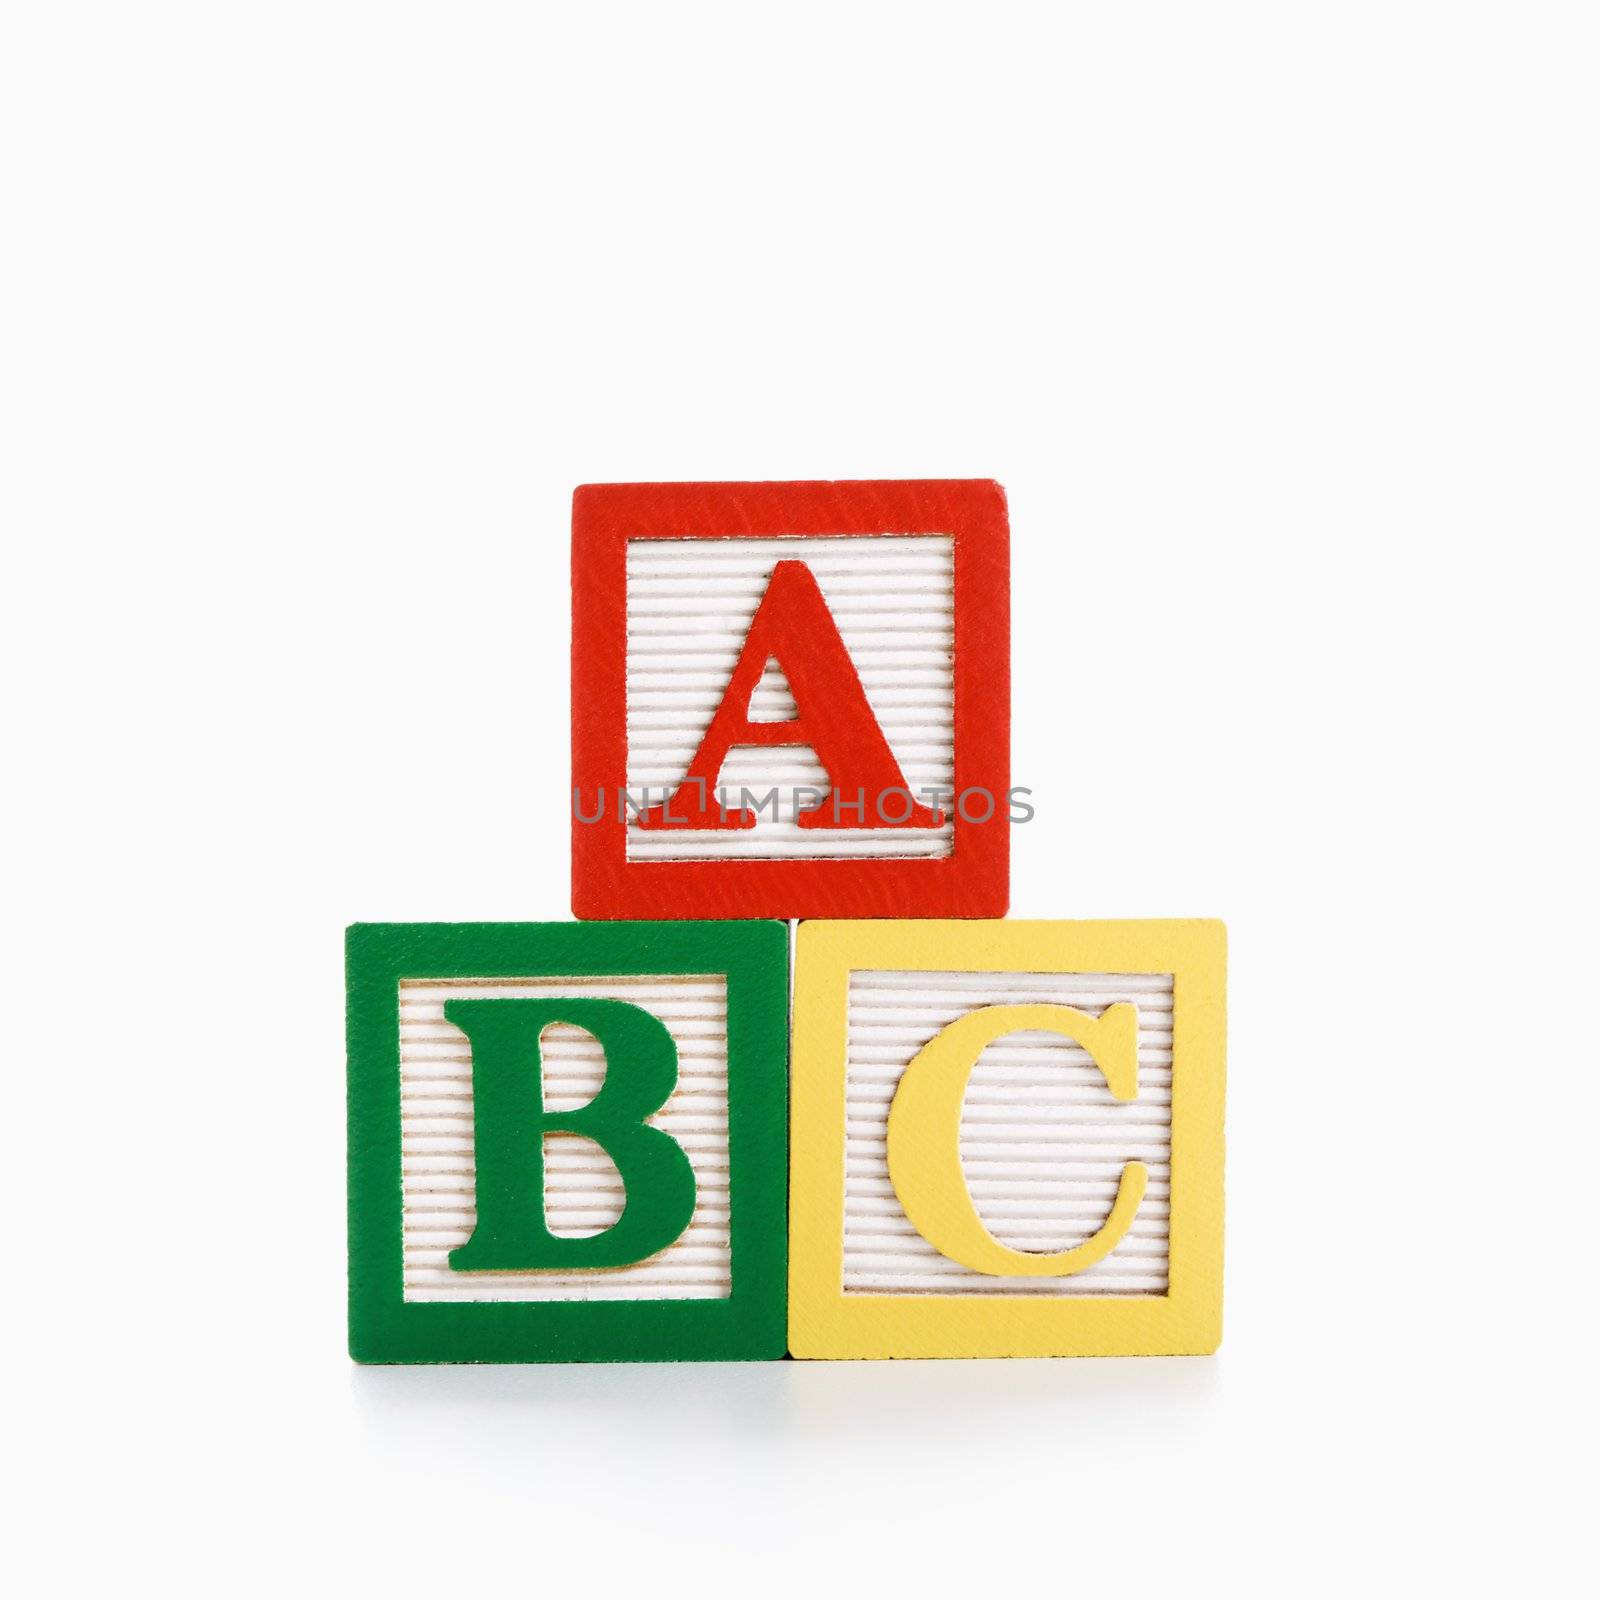 ABC Alphabet blocks stacked together.